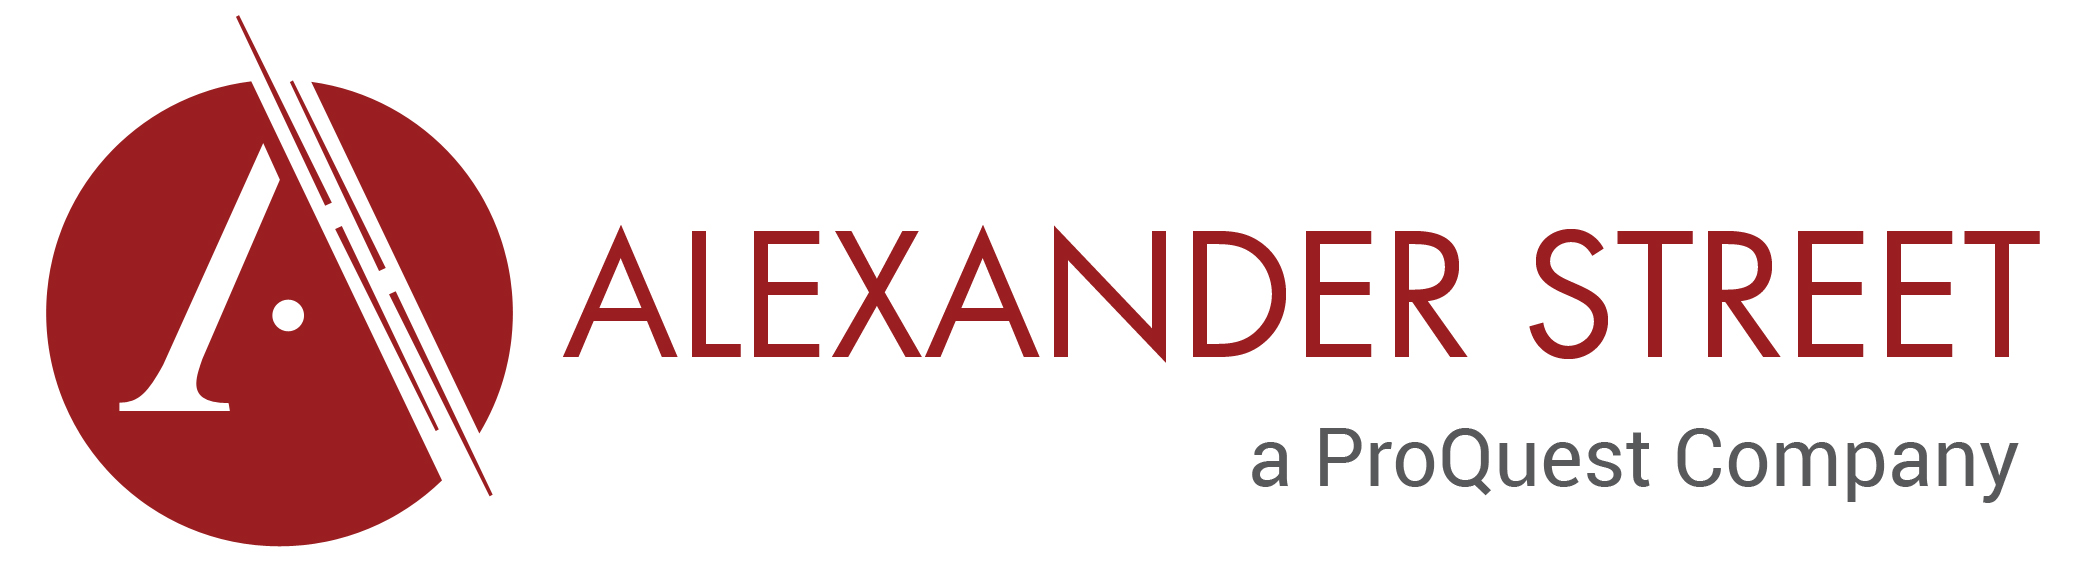 Alexander Street academic video online logo